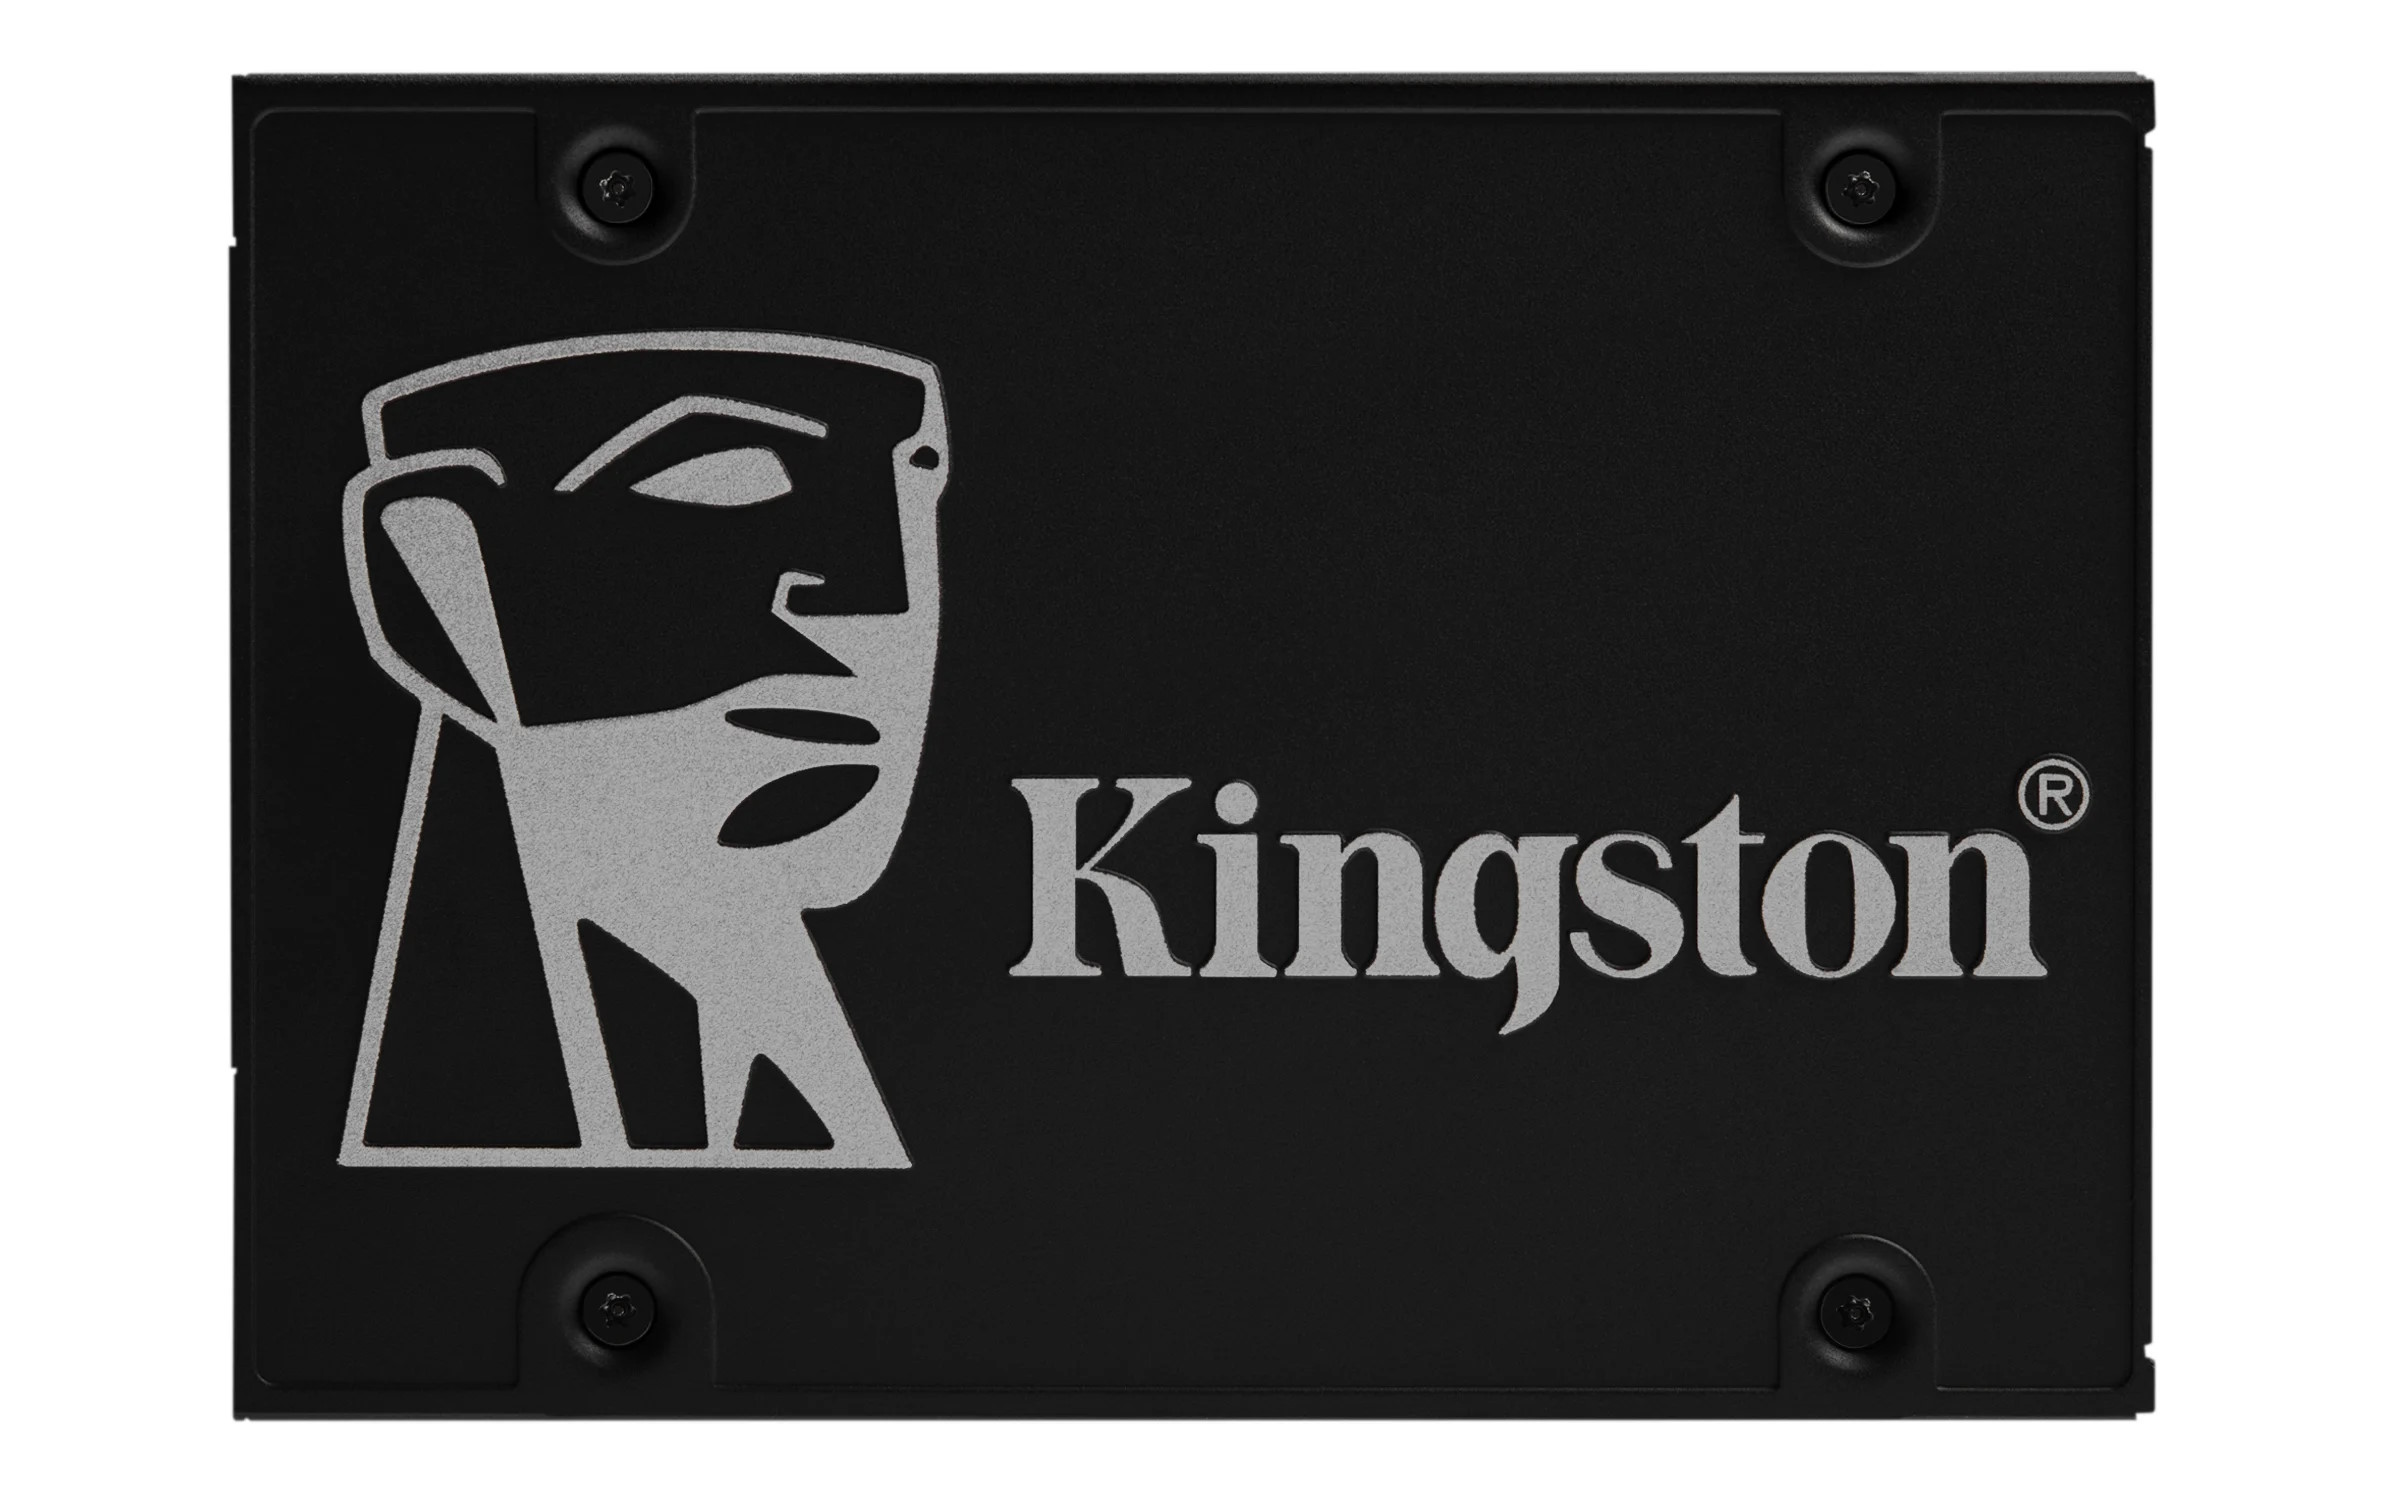 KINGSTON SSD INTERNO KC600 CRITTOGRAFATO 1TB 2.5 SATA 6GB/S SKC600/1024G